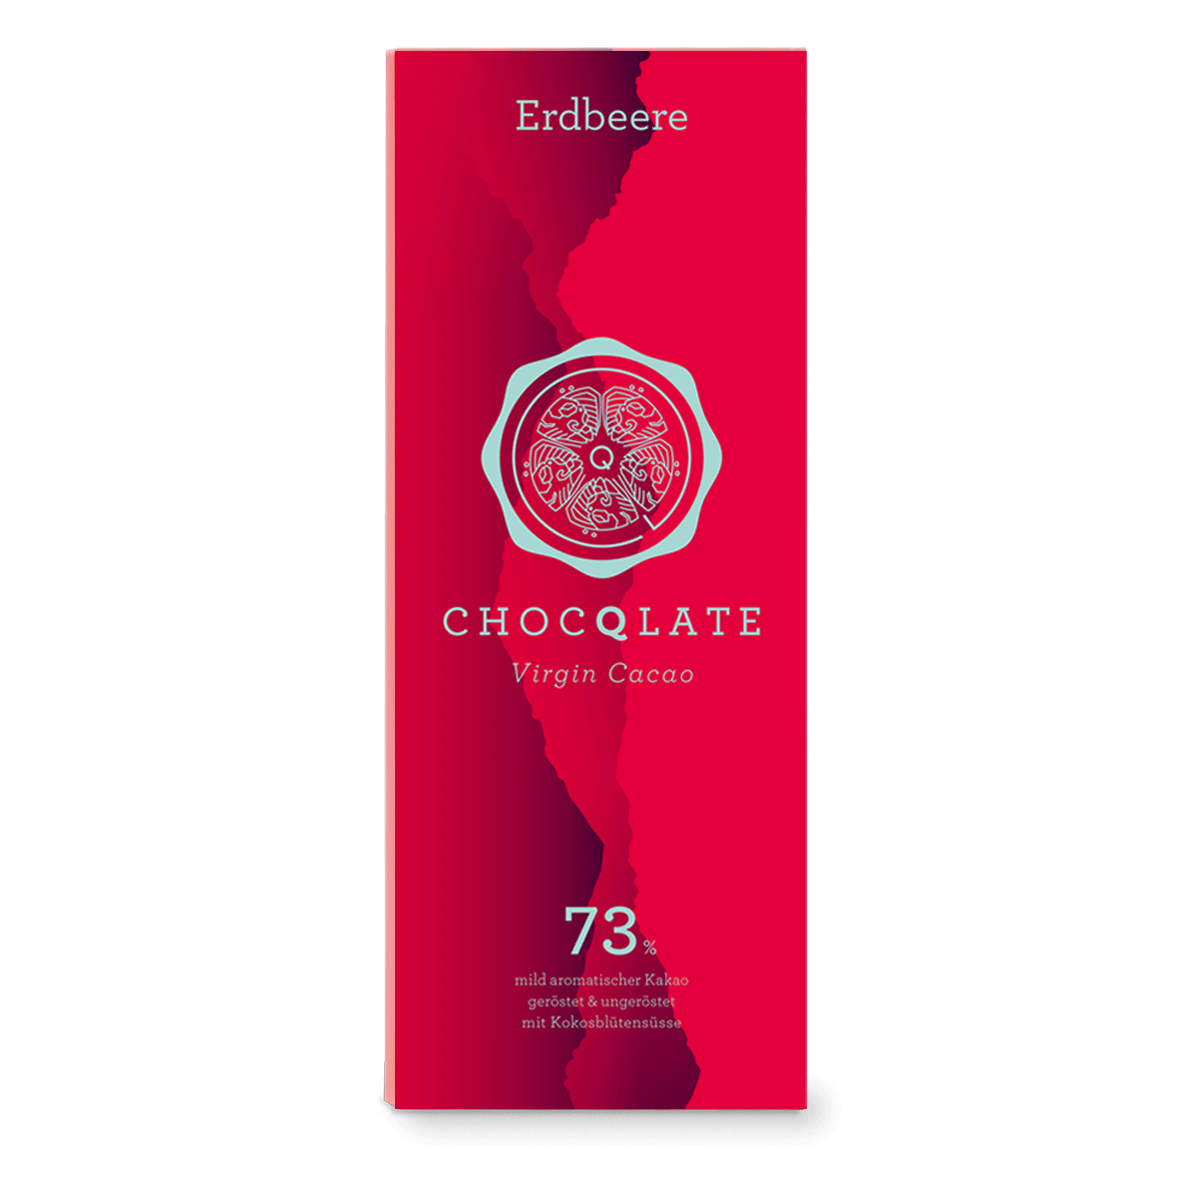 CHOCQLATE chocolat bio fraise au cacao vierge